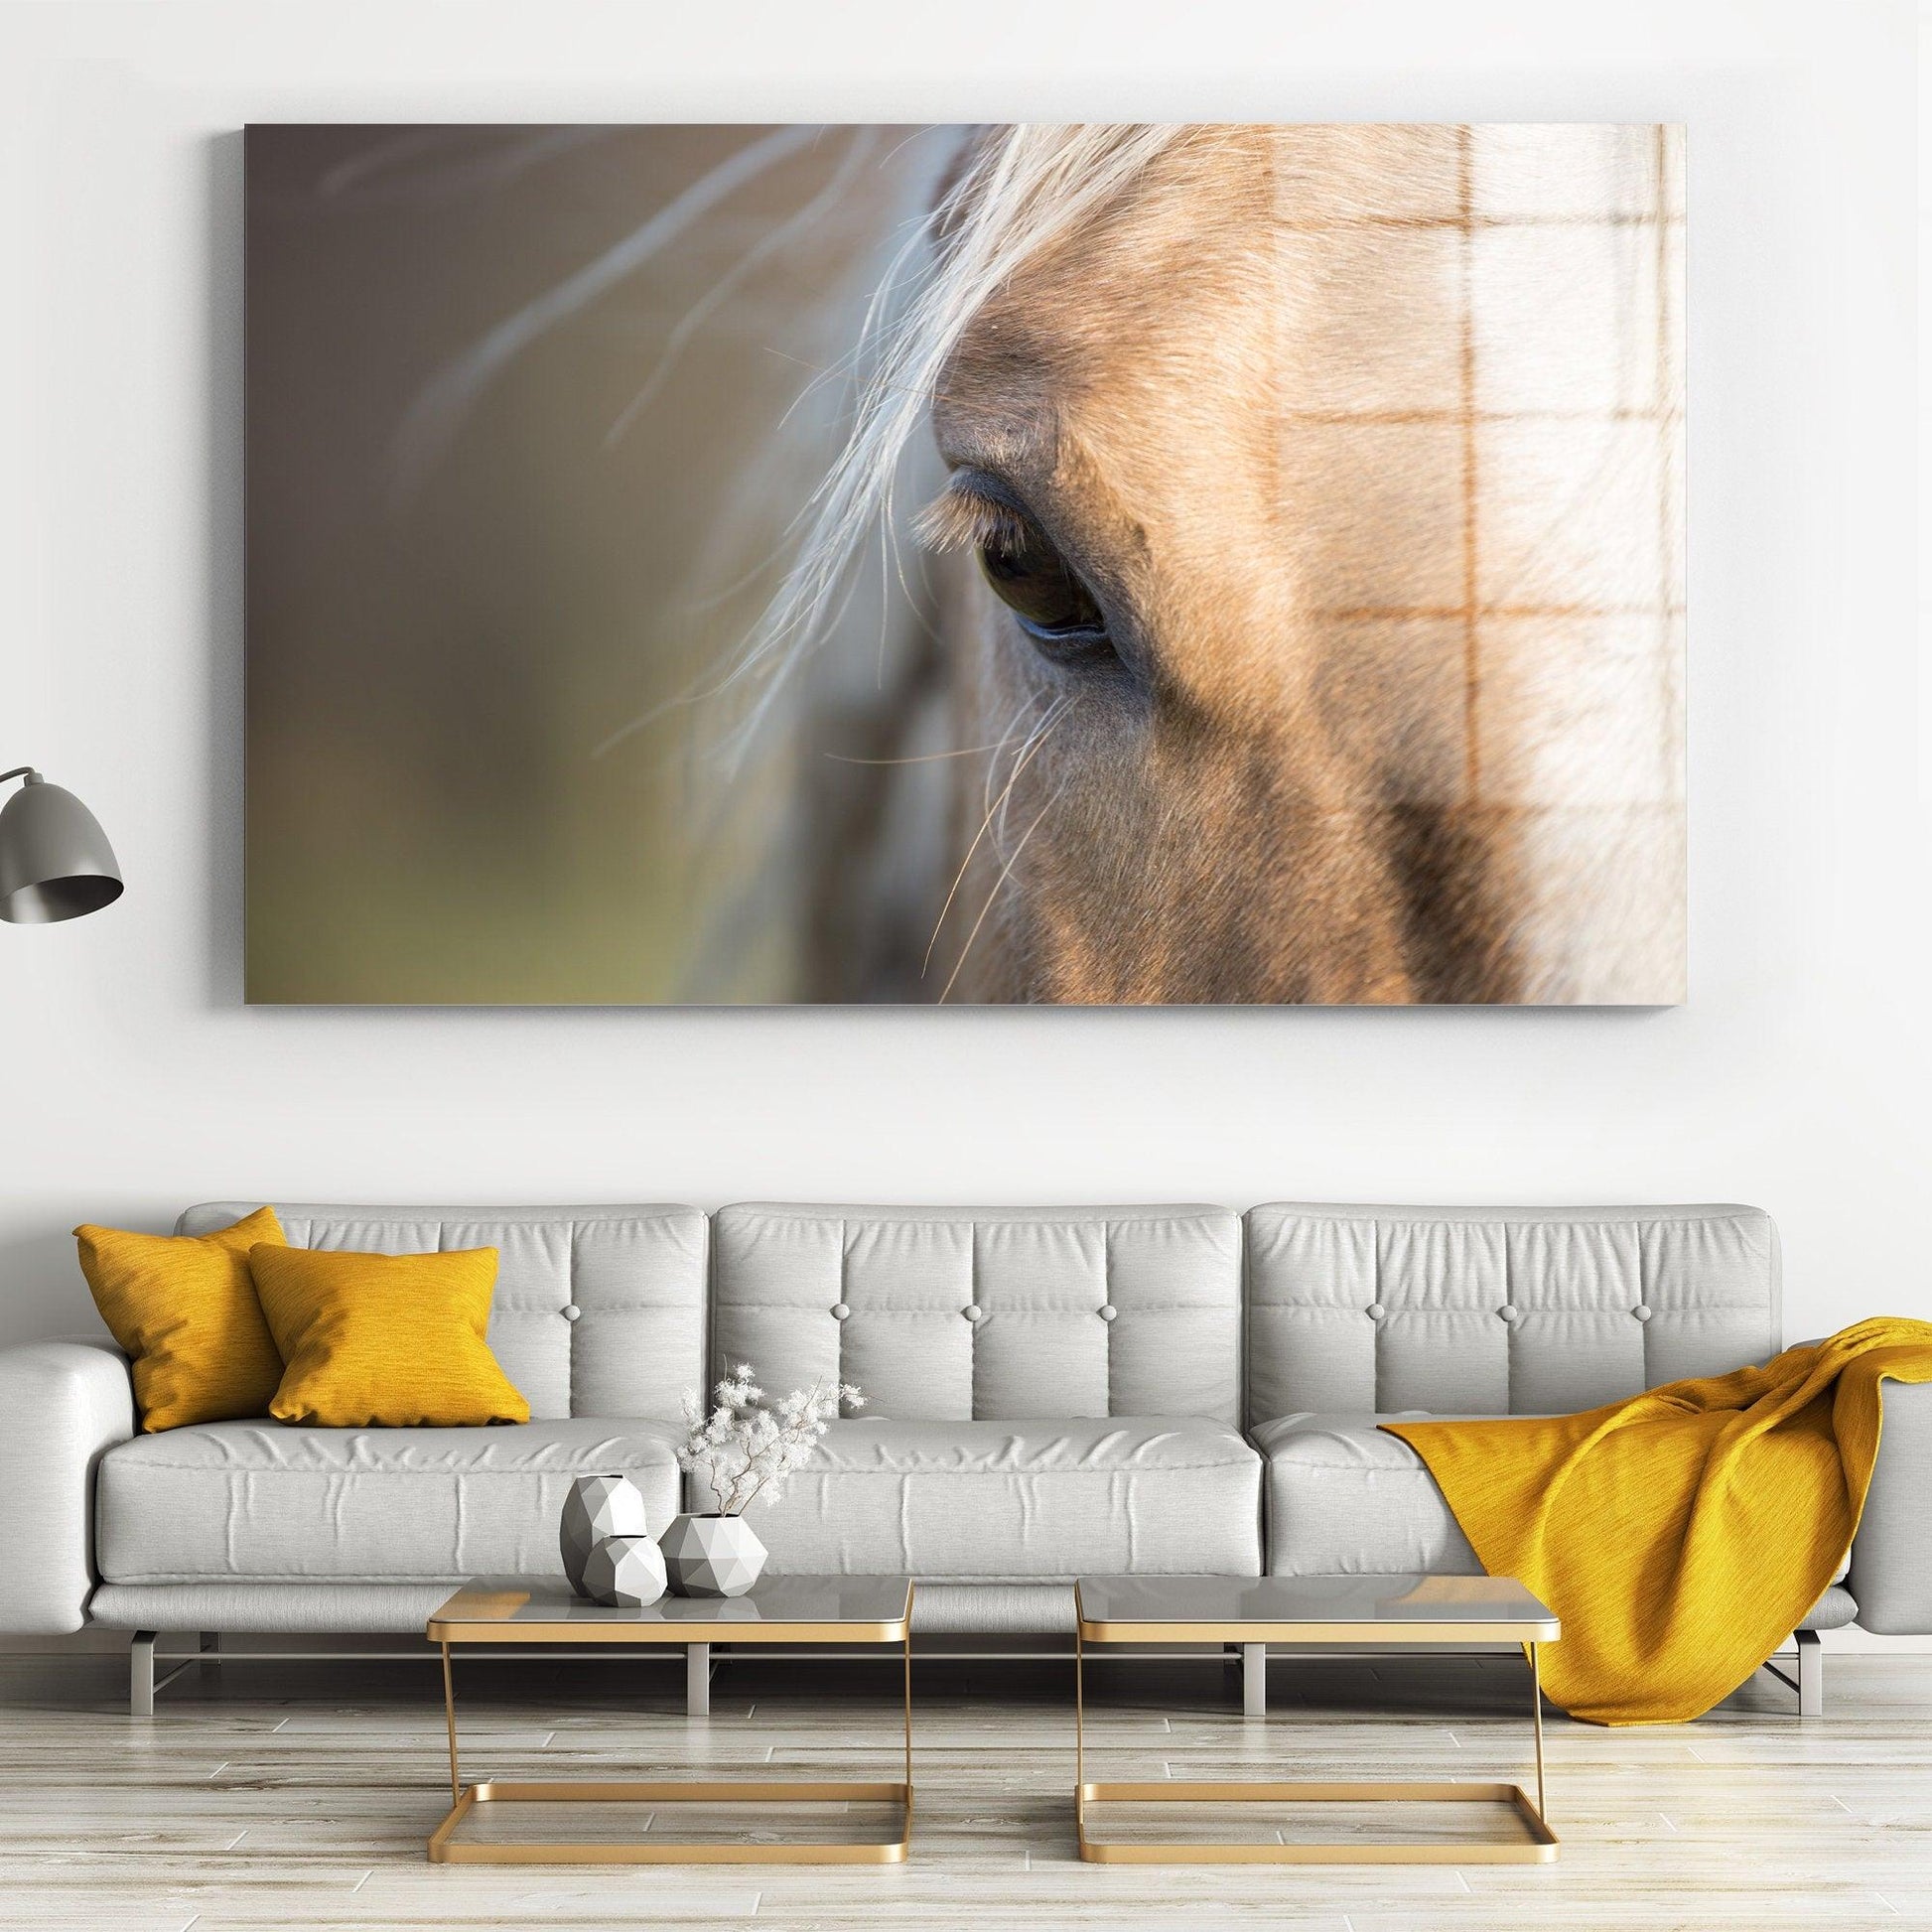 Horse head canvas Wall Art | Horse Canvas Print, Multiple Sizes, Horse Wall Decor, Modern Horses Decoration, Wall Horses Stylish Design